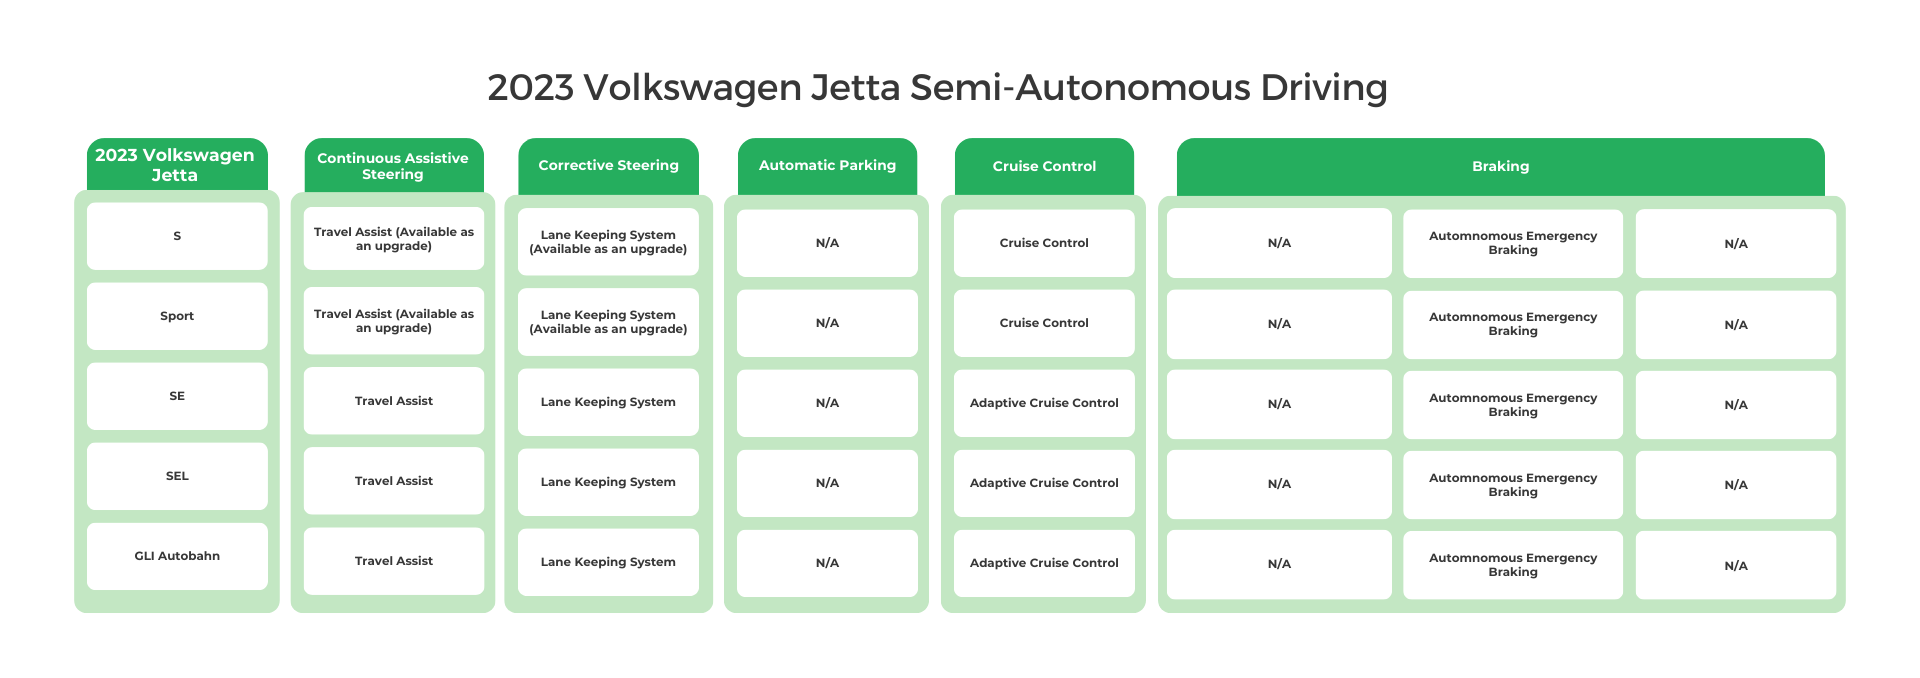 2023 Volkswagen Jetta Semi-Autonomous Driving